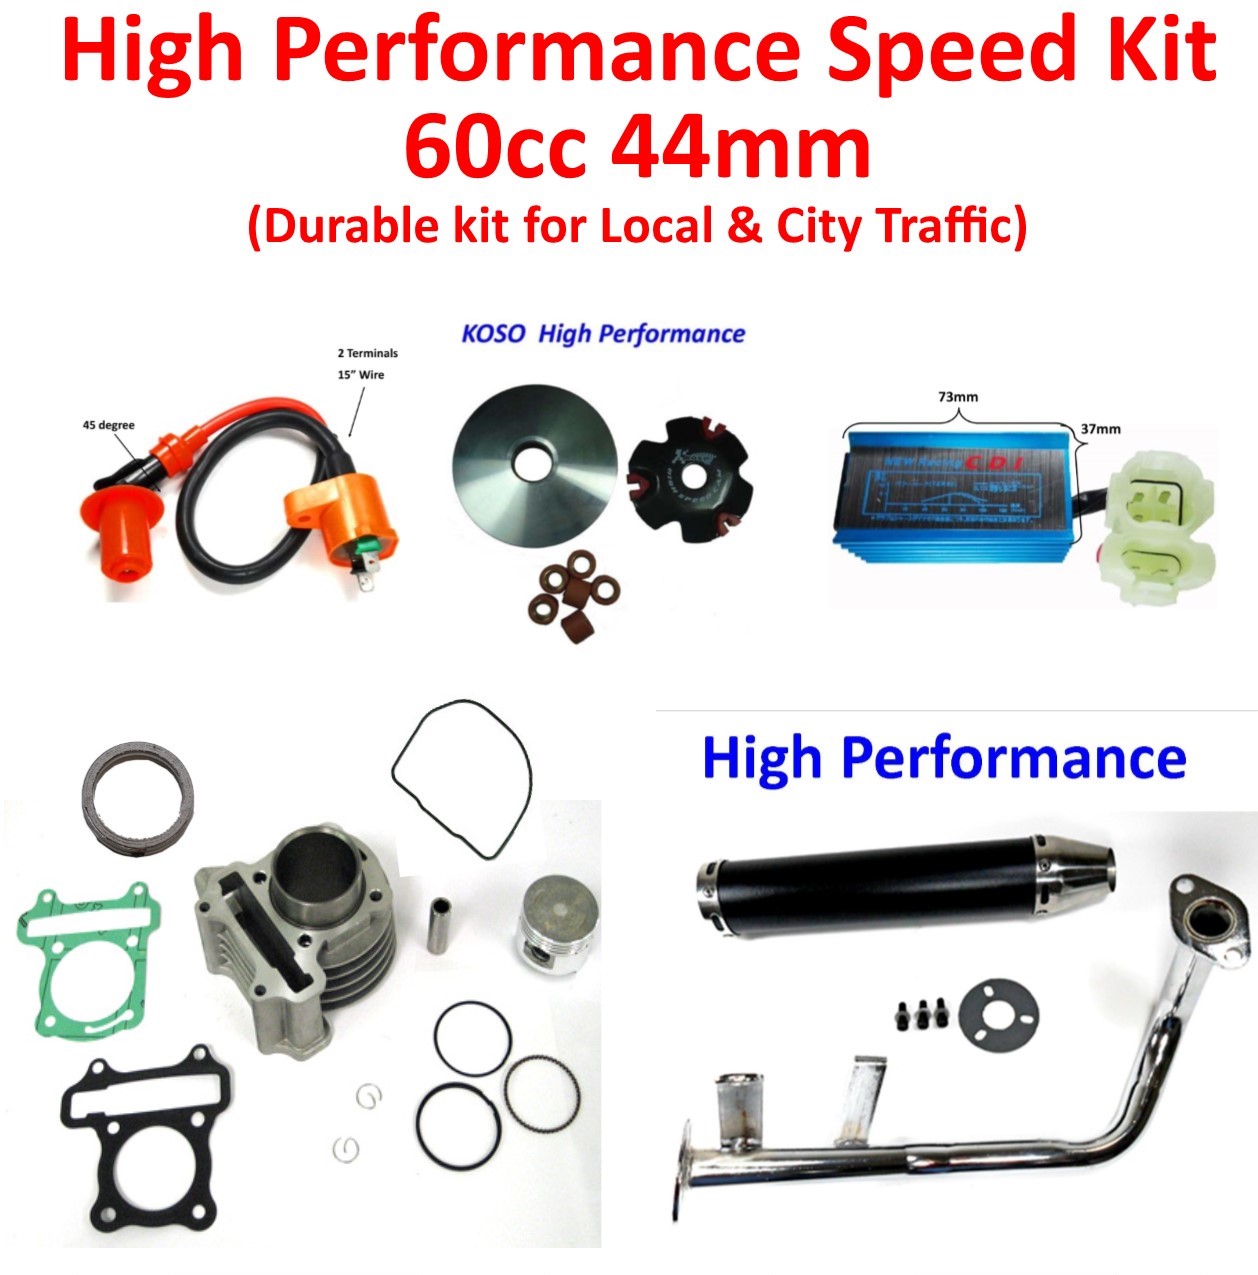 High Performance Speed Kit GY6-60cc (44mm)